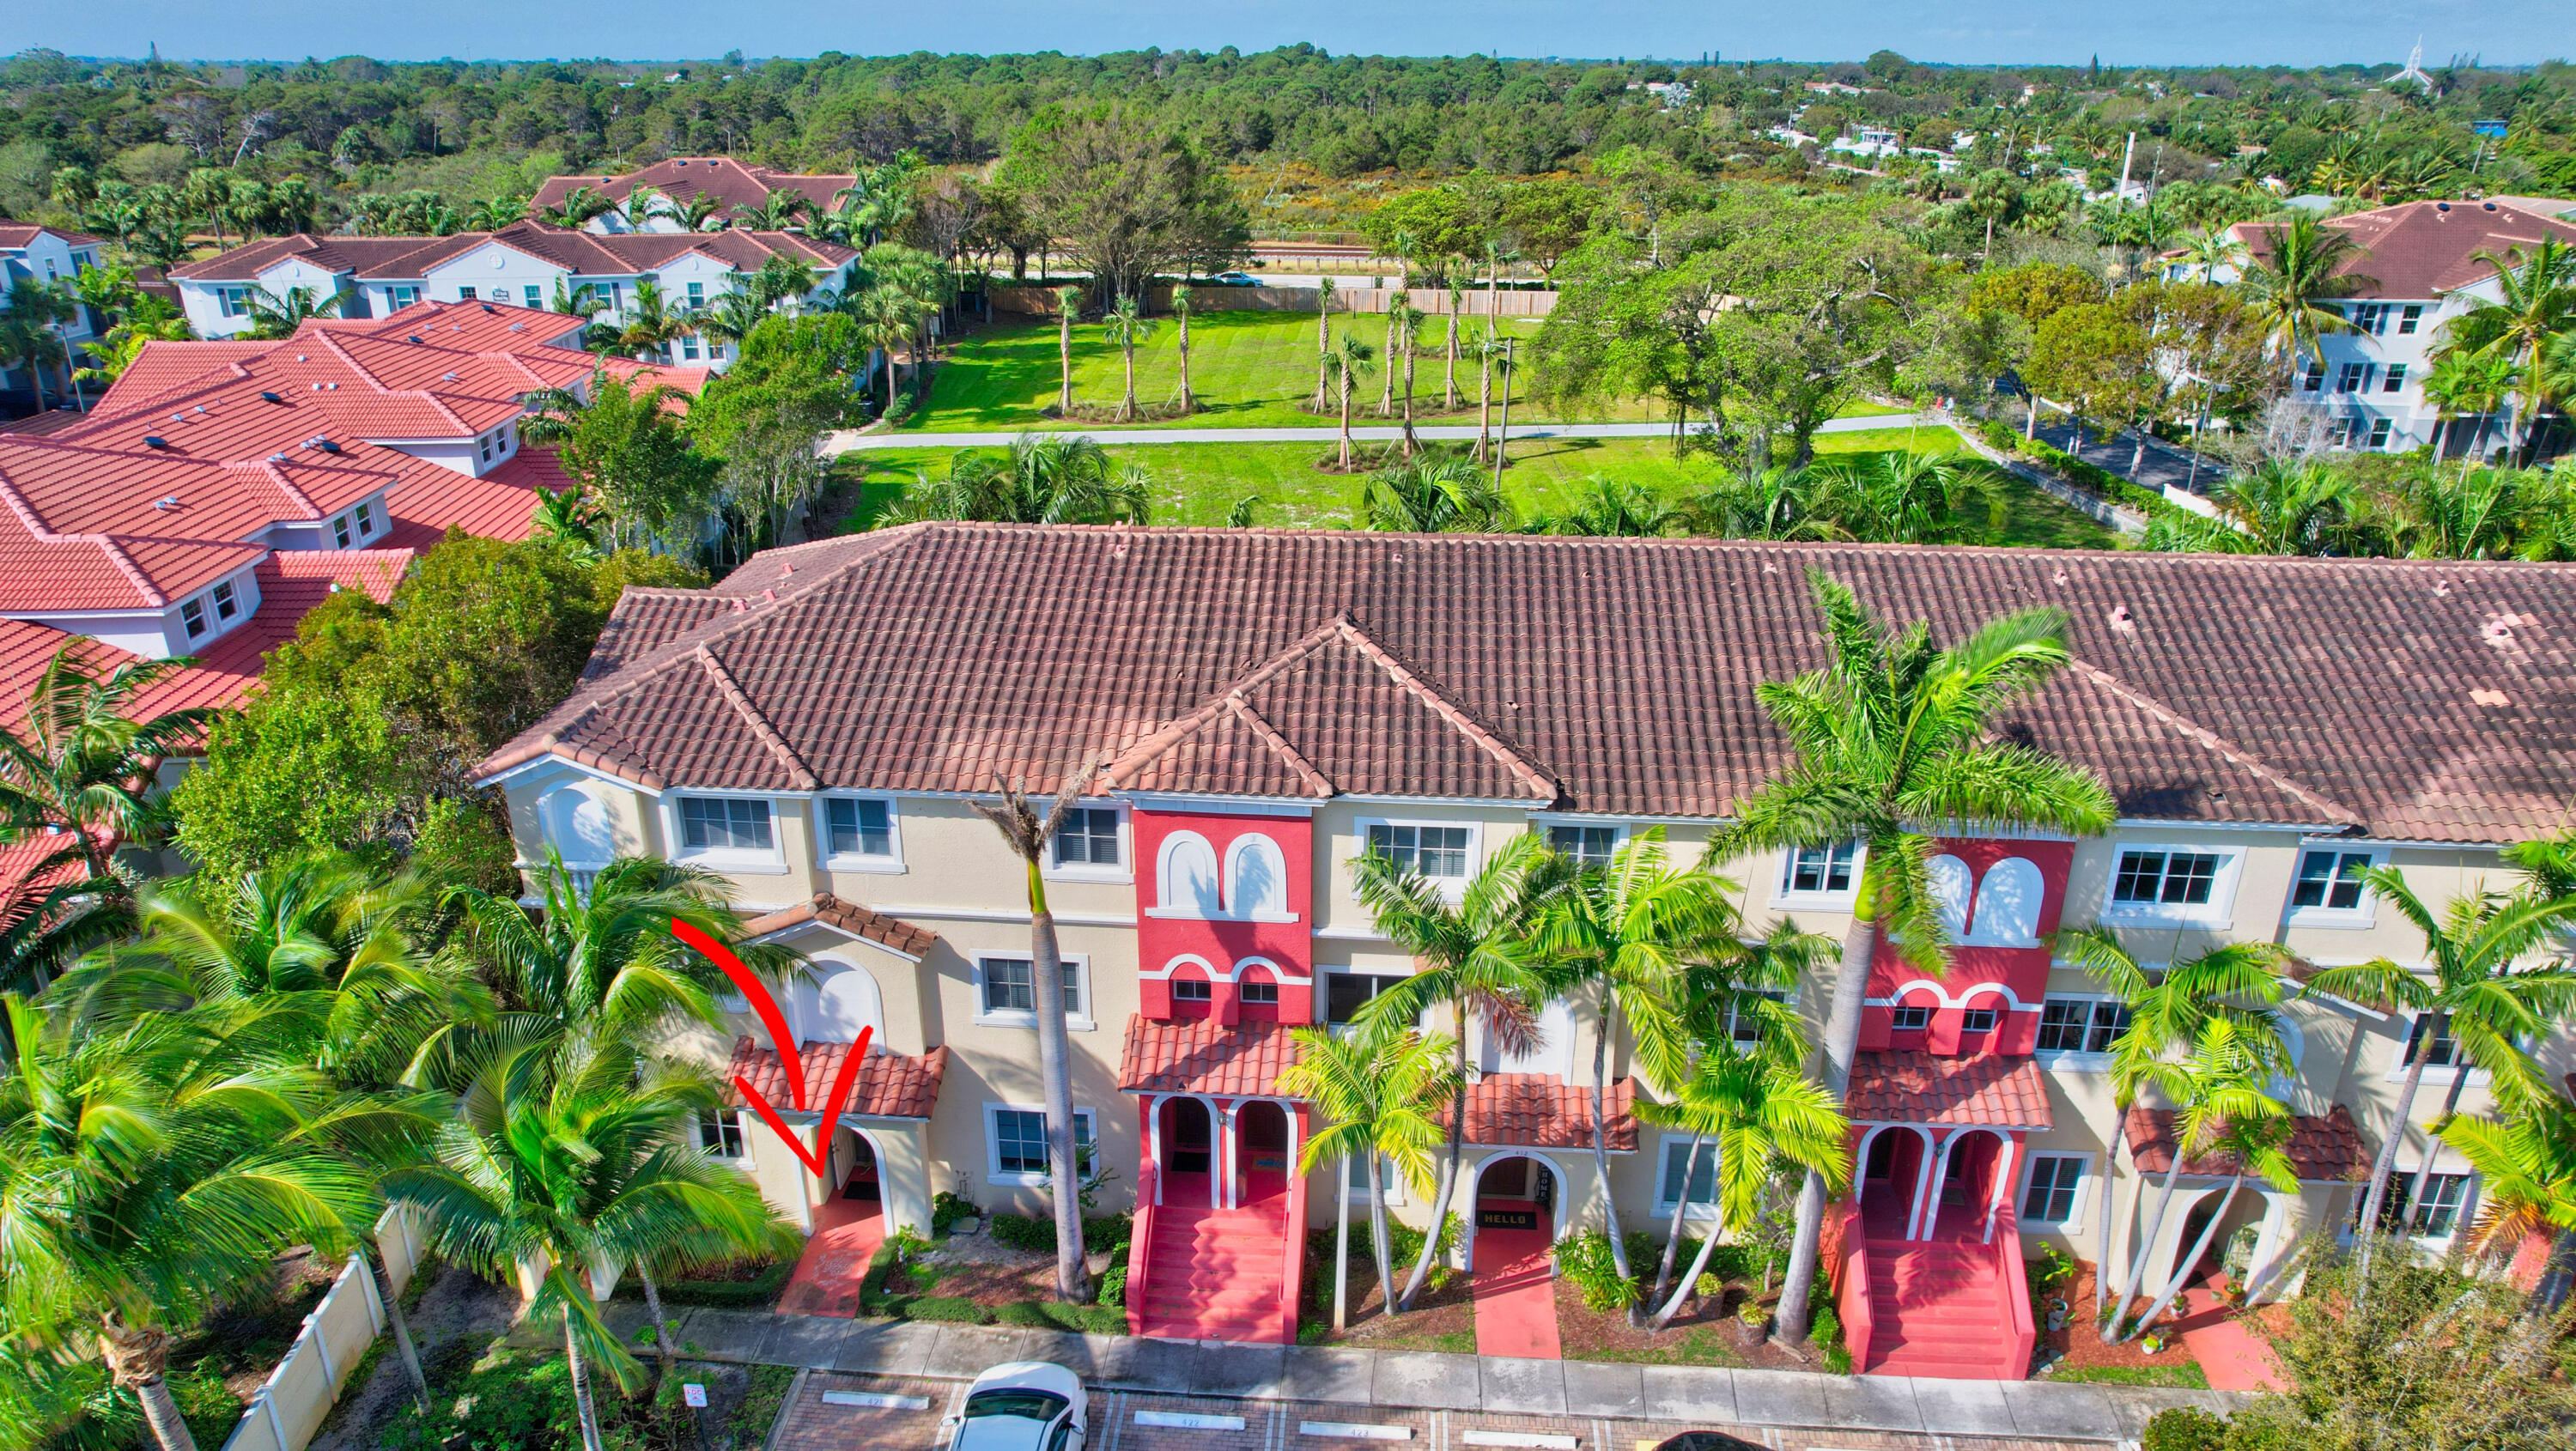 Property for Sale at 411 Bayfront Drive, Boynton Beach, Palm Beach County, Florida - Bedrooms: 3 
Bathrooms: 2  - $345,000